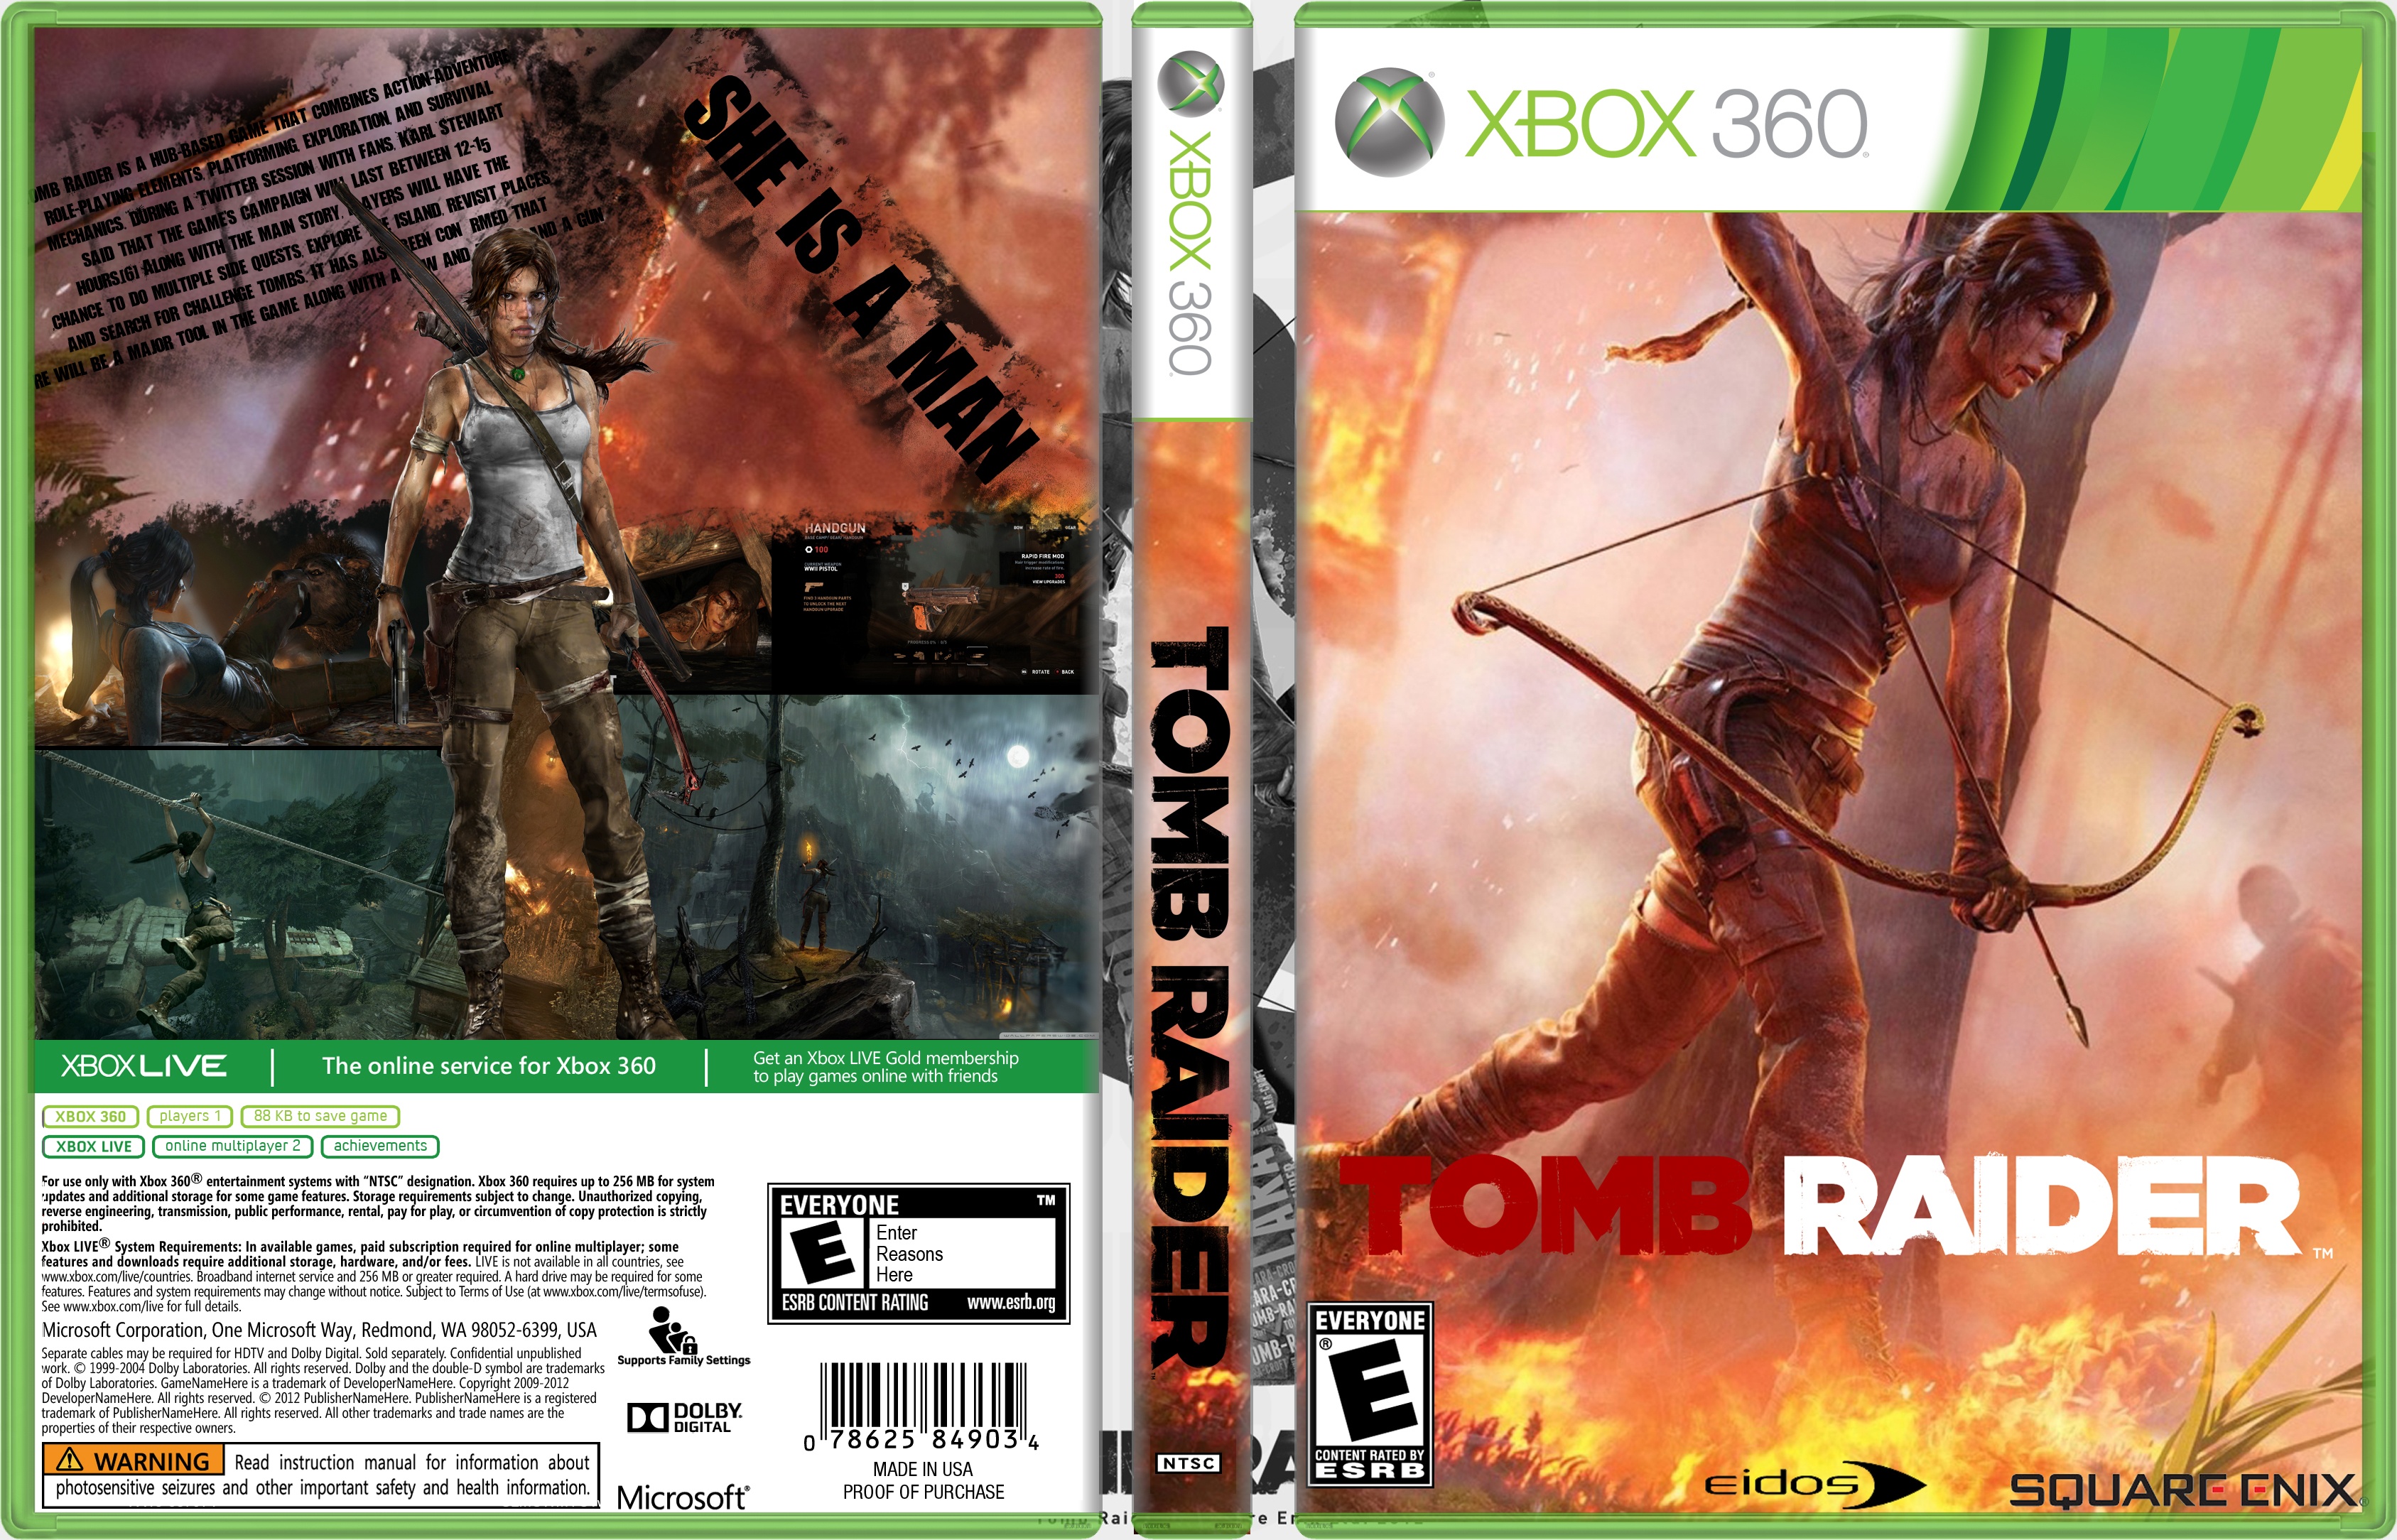 Tomb Raider 2013 box cover